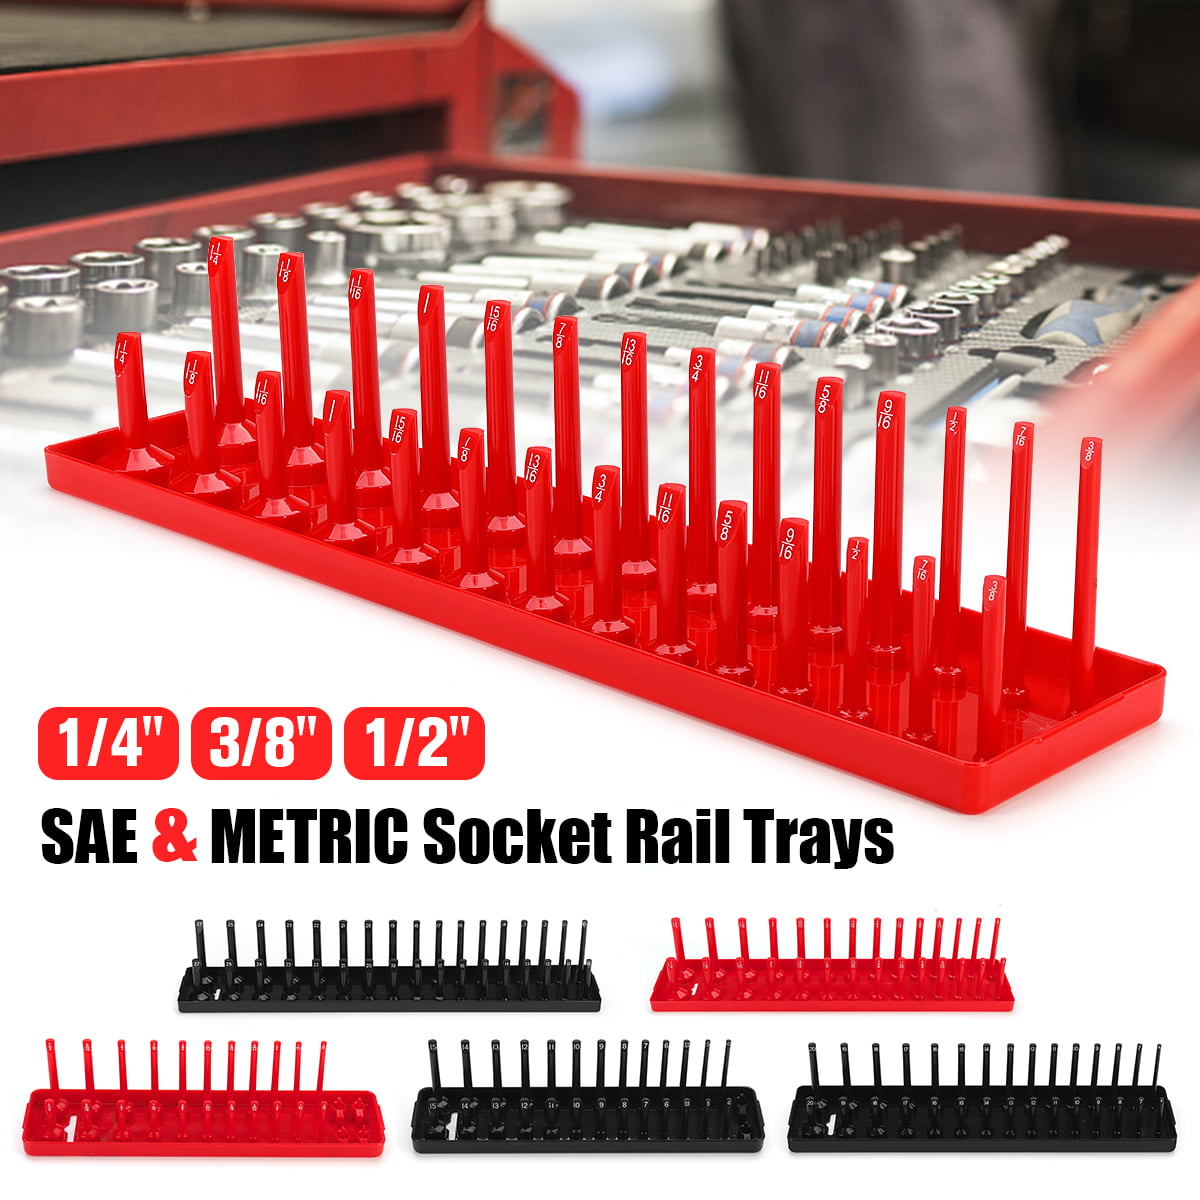 3/8" Socket Organizers Holders Rail Rack Tray Metric Storage Pegs Black